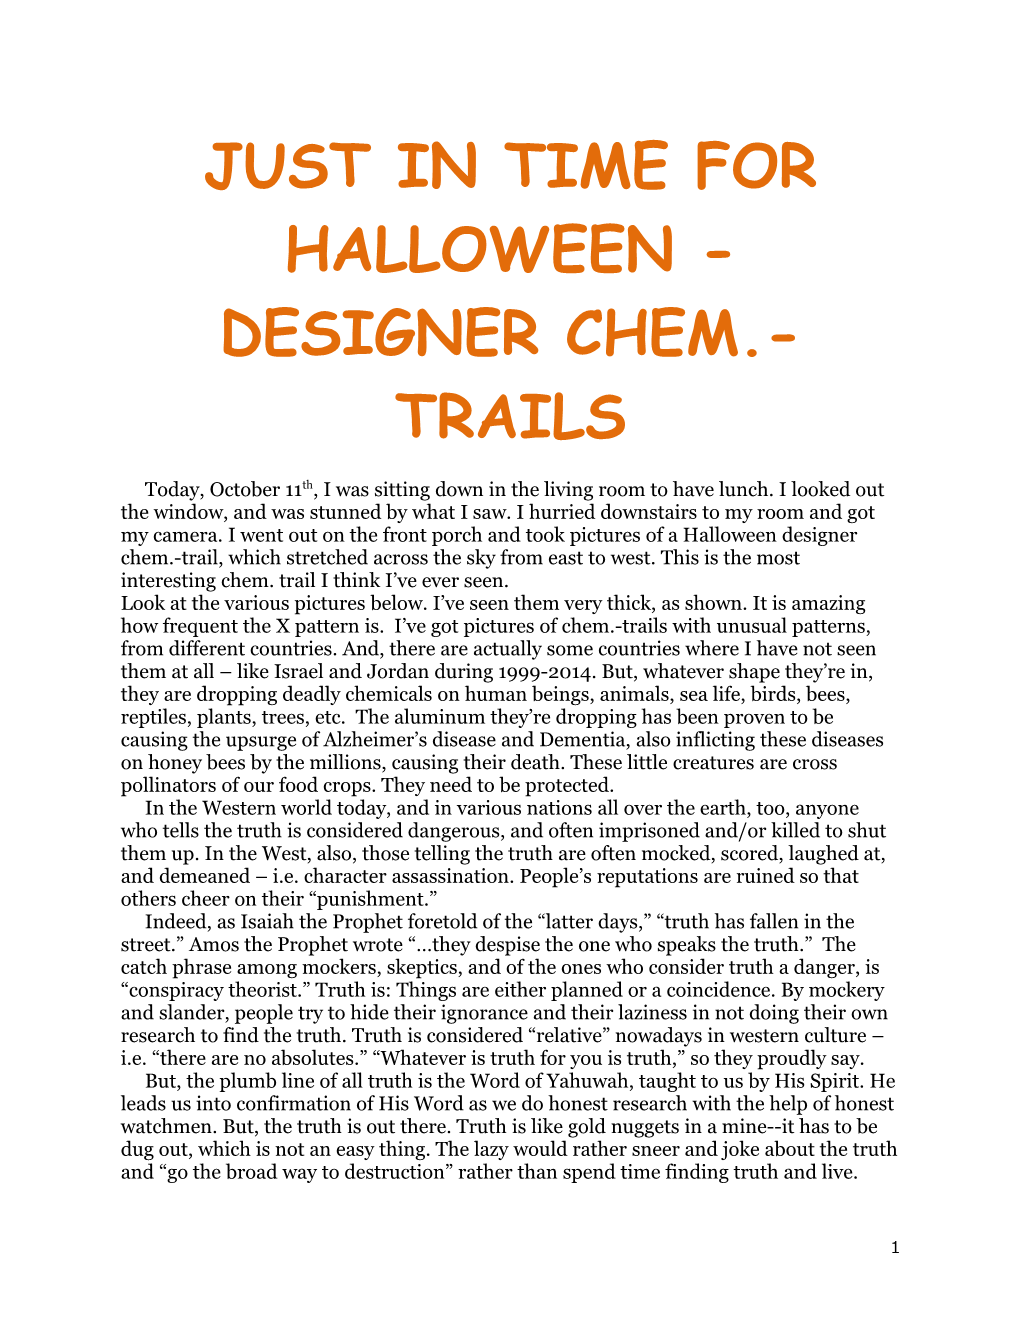 Just in Time for Halloween - Designer Chem.-Trails